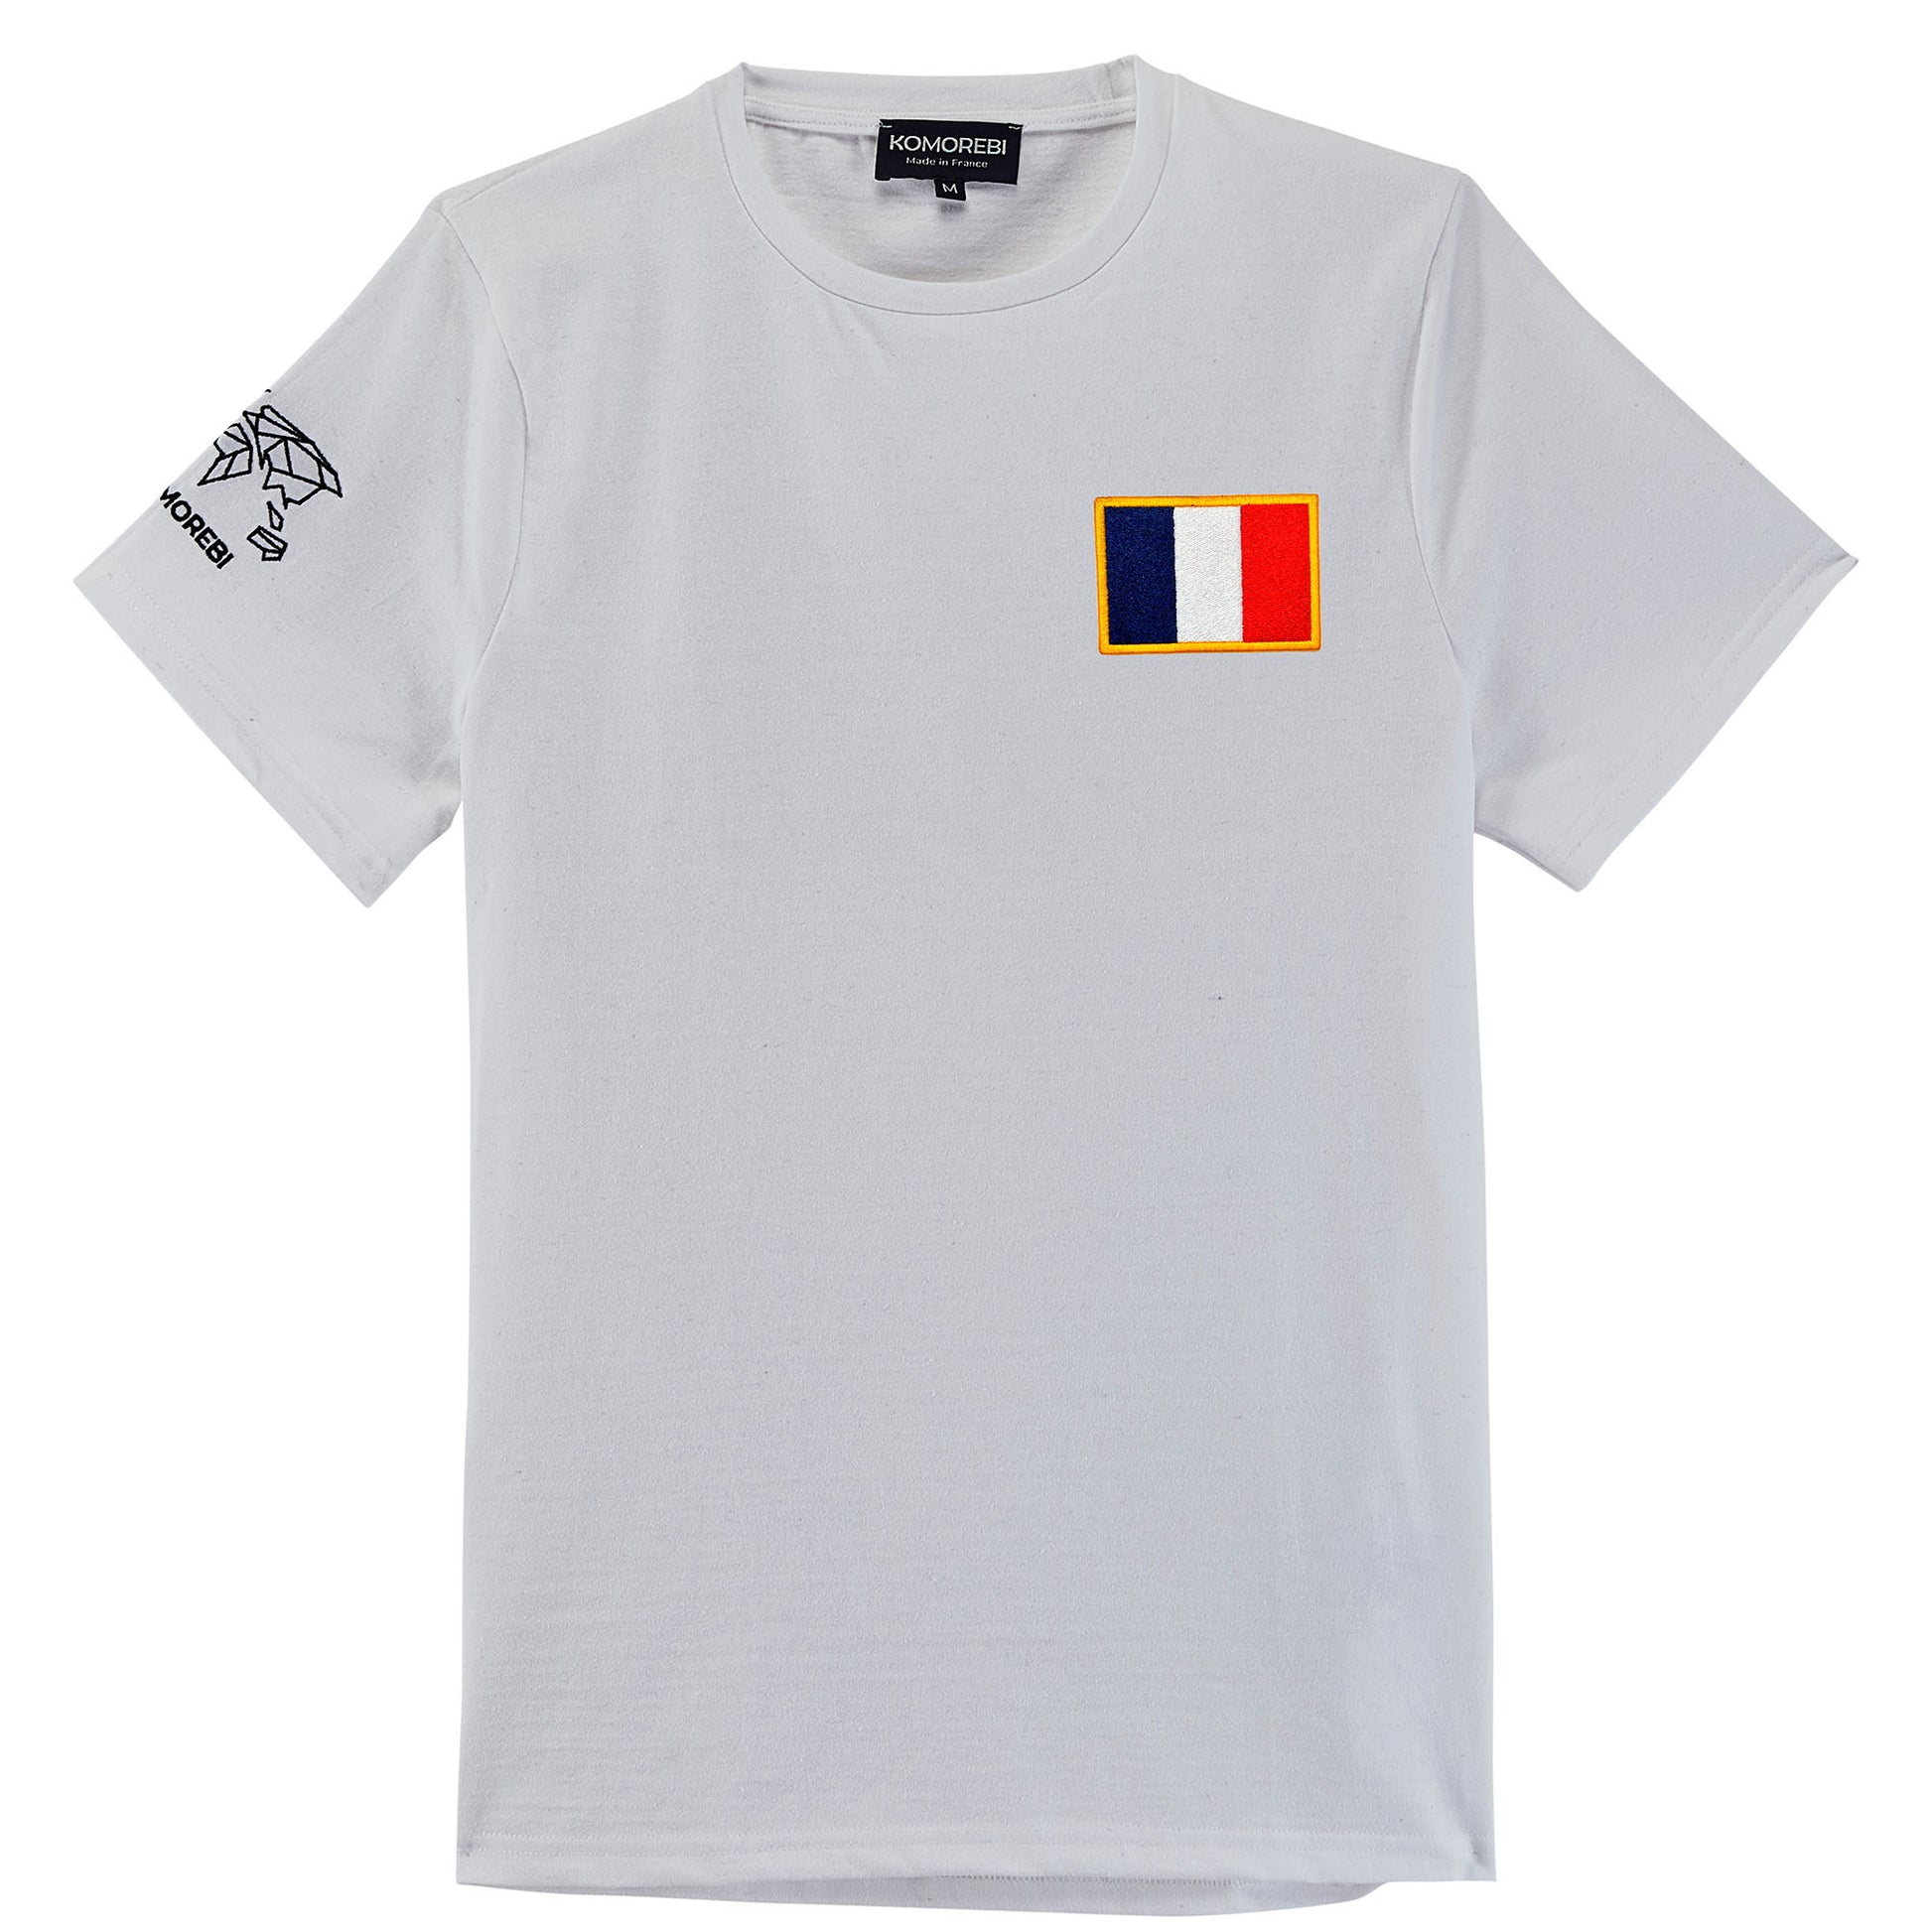 T-shirts • Komorebi – France